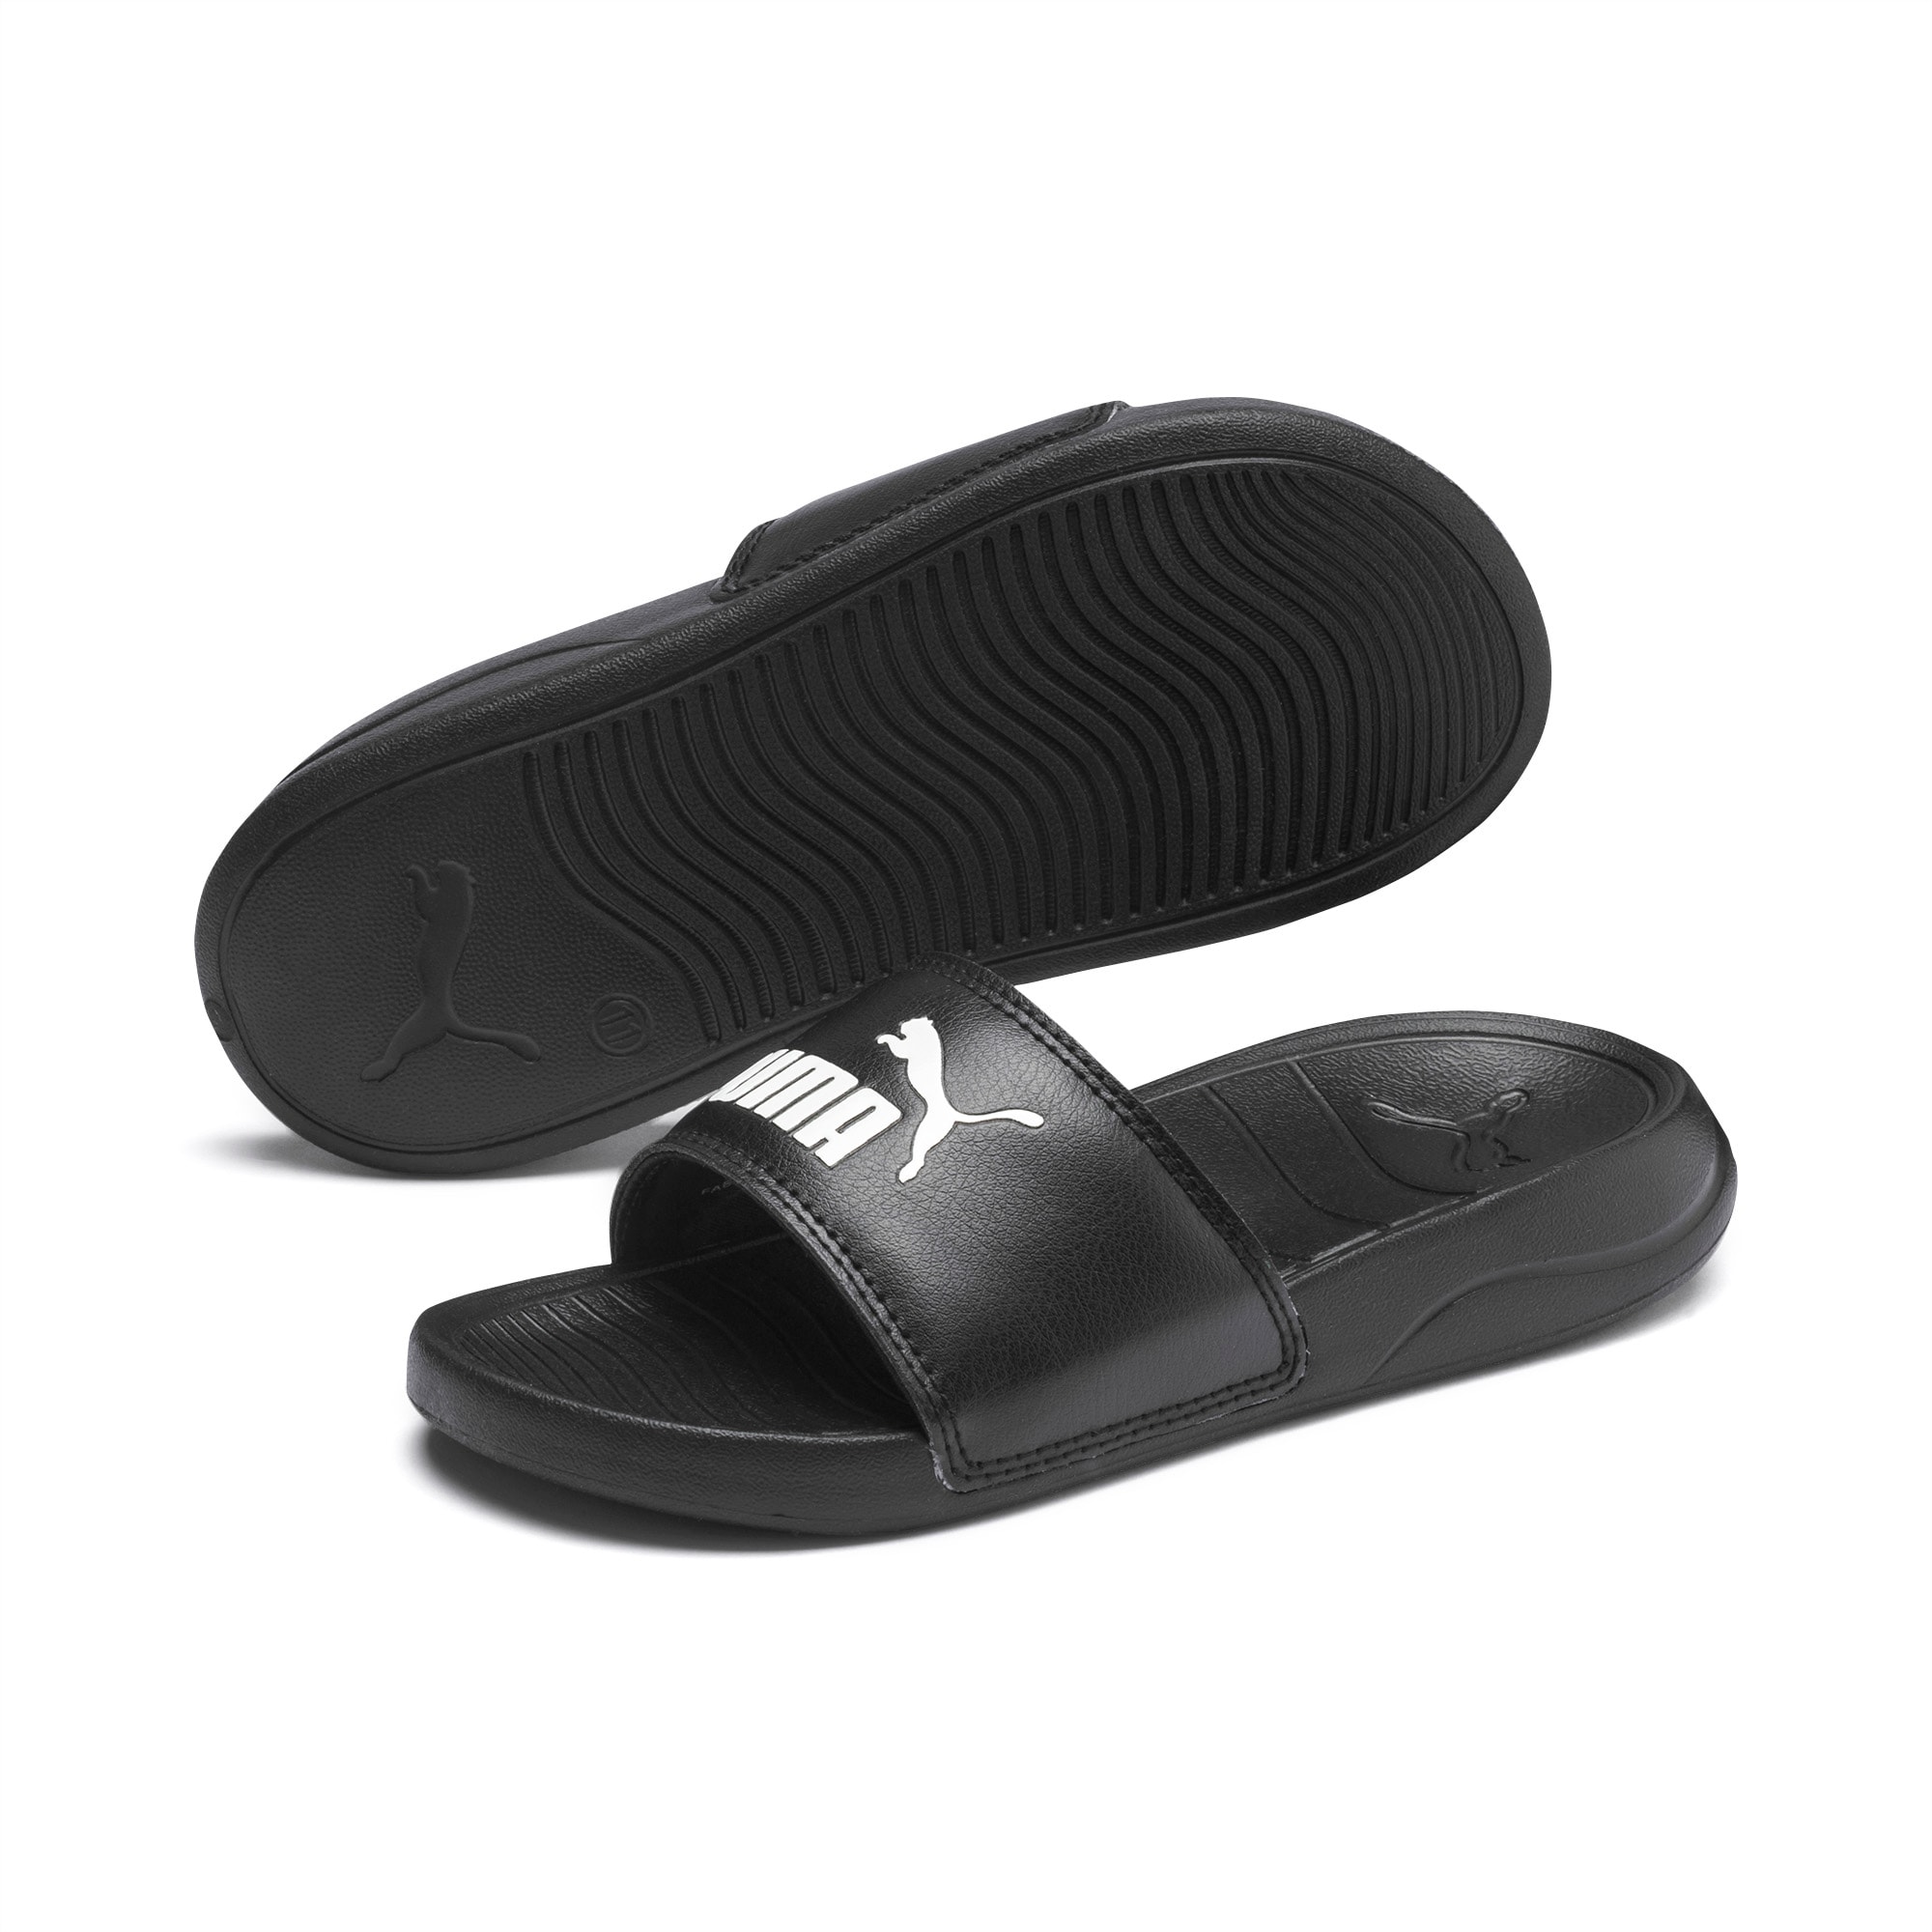 PUMA Popcat 20 Kids' Sandals, Black/White, Size 28, Shoes